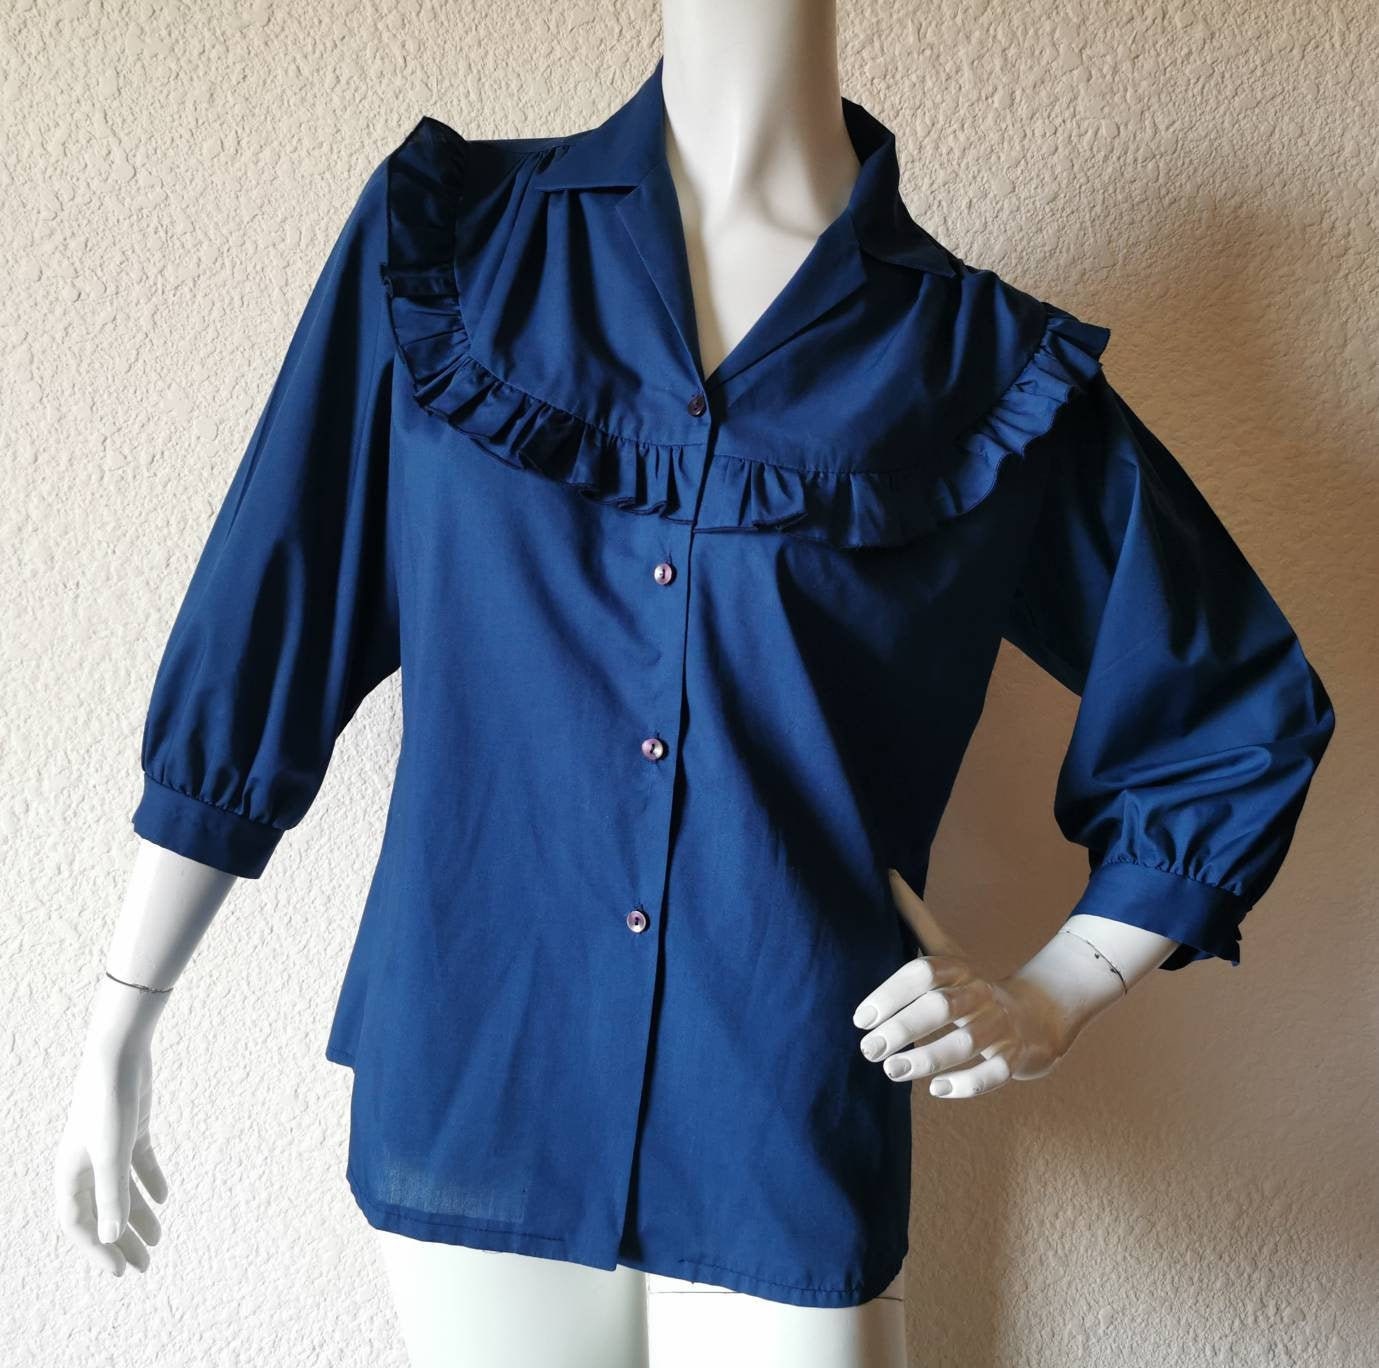 Vintage navy blue blouse